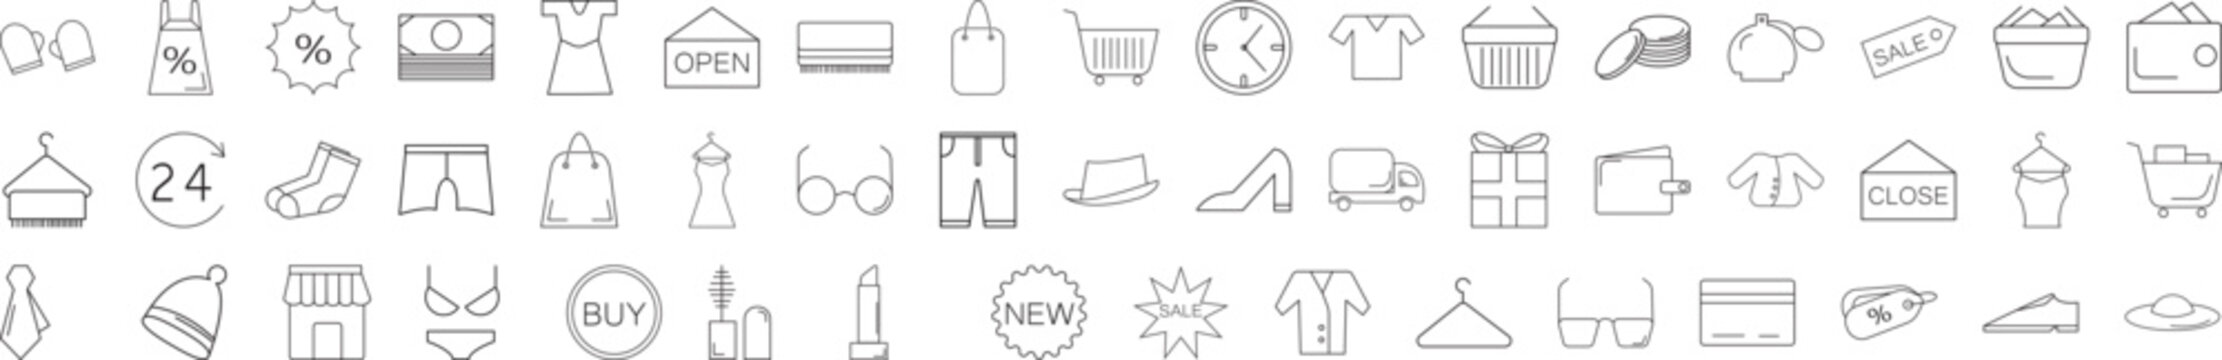 Shoppingex icon collections vector design